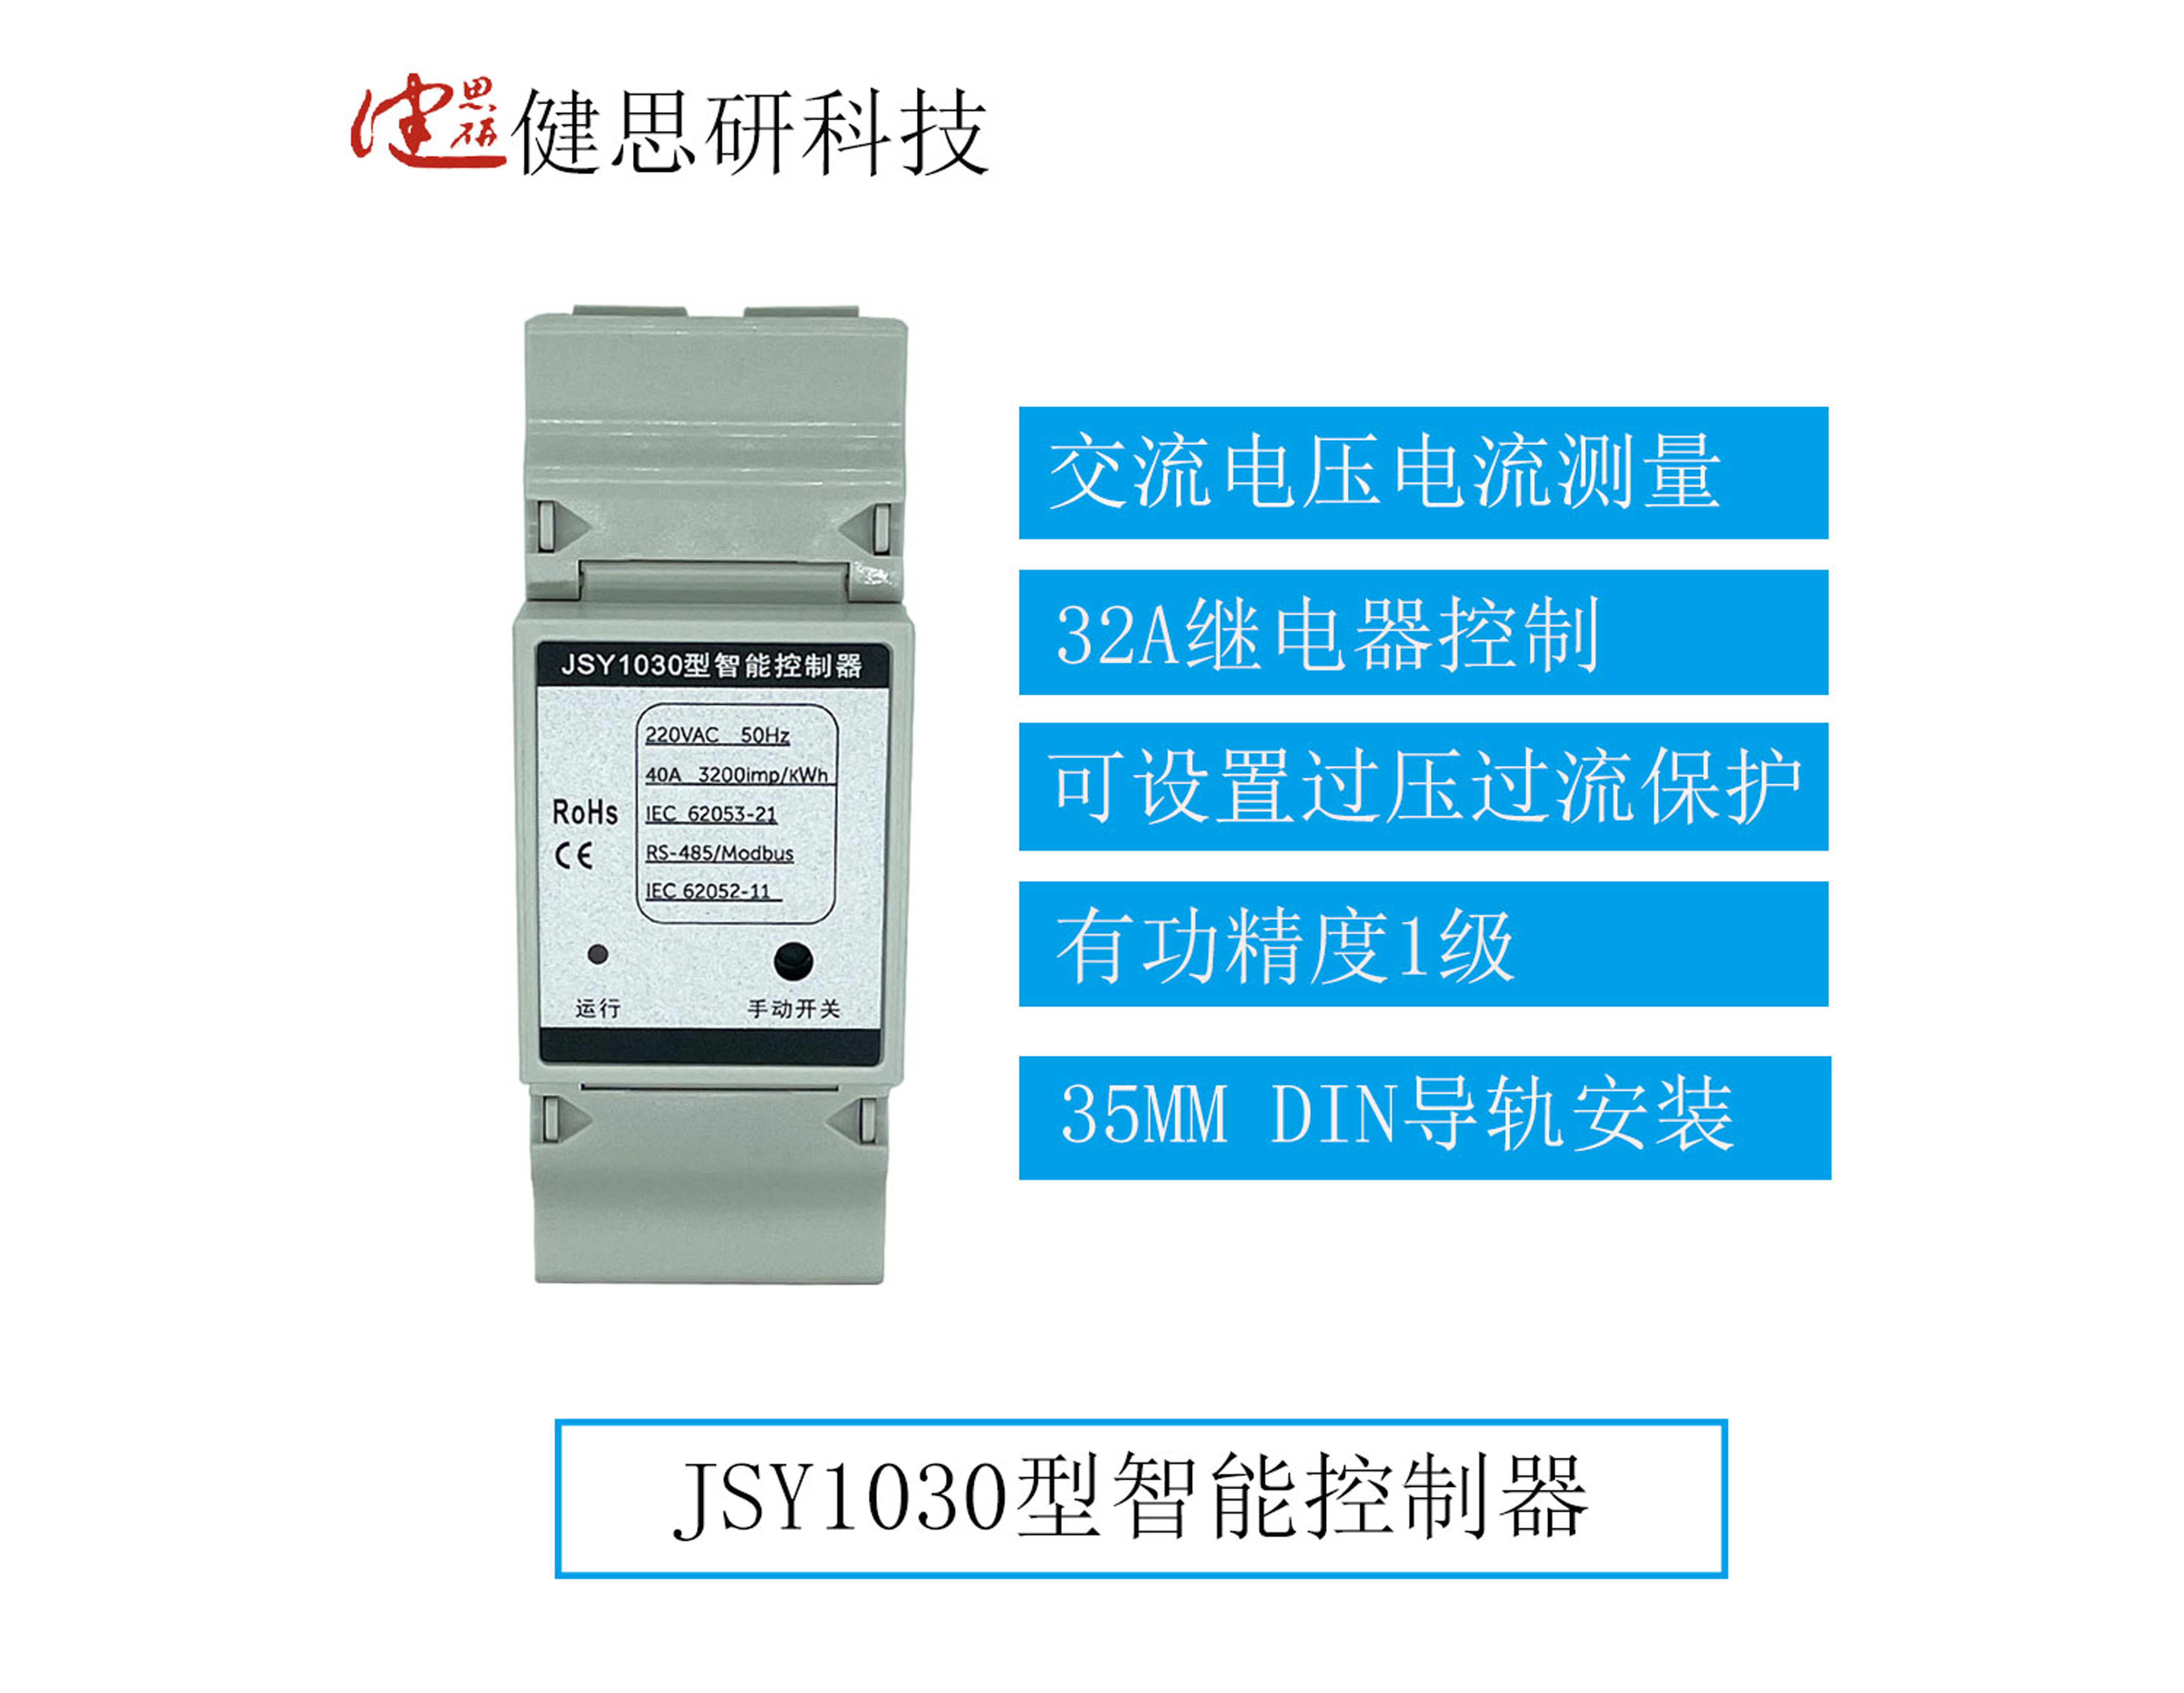 JSY1030型智能控制器